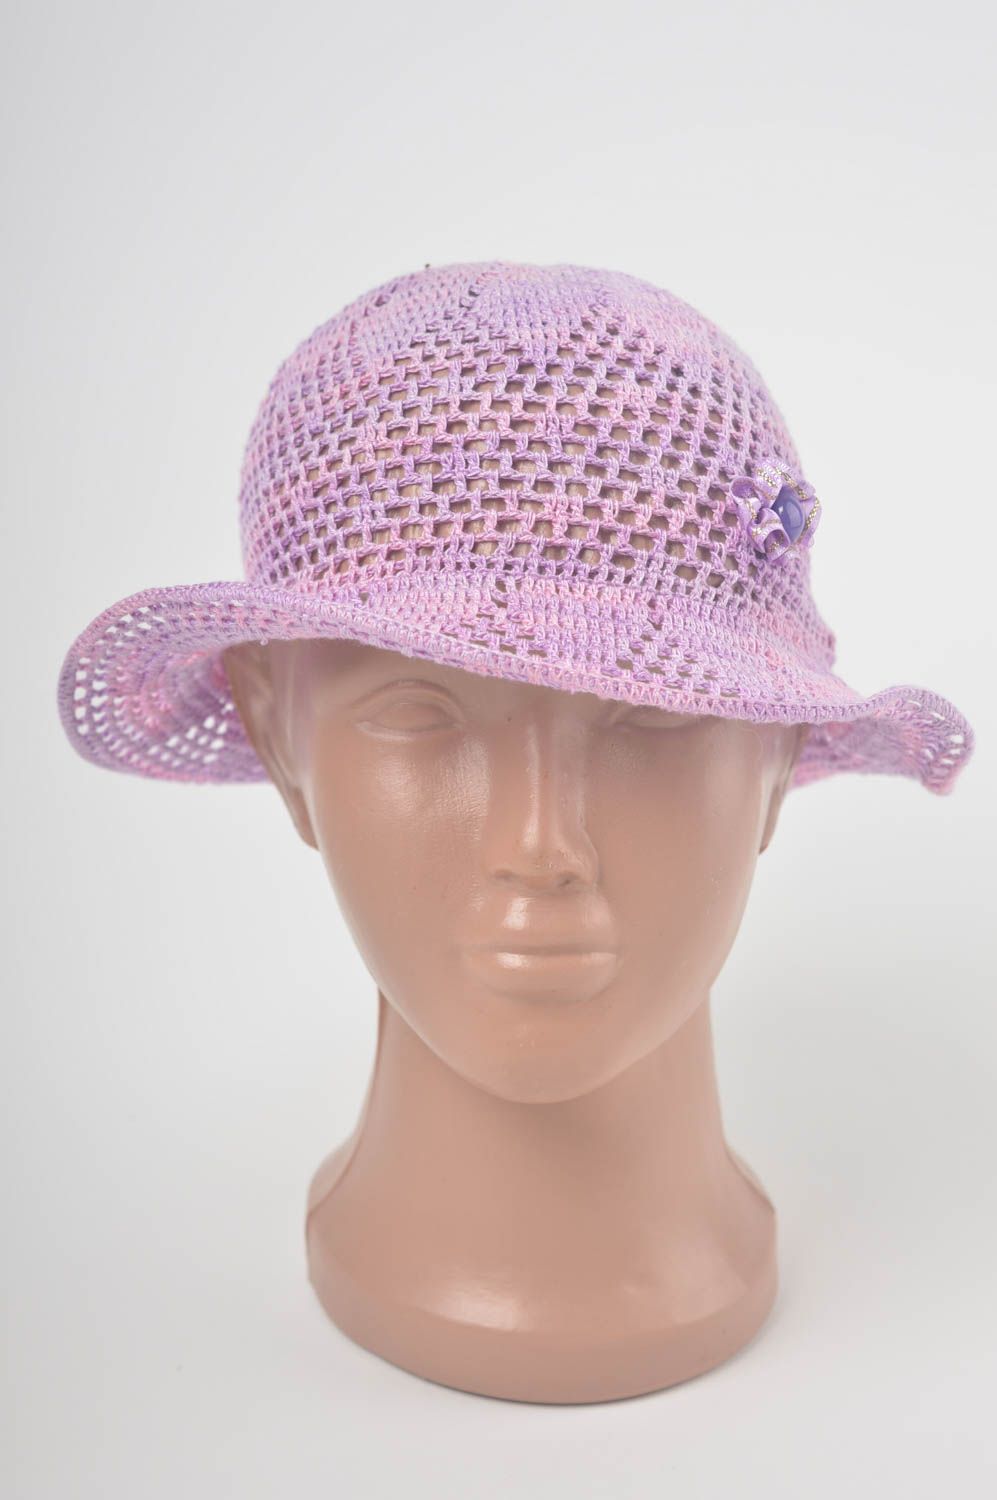 Unusual handmade summer hat cute hats crochet baby hat design gifts for kids photo 2